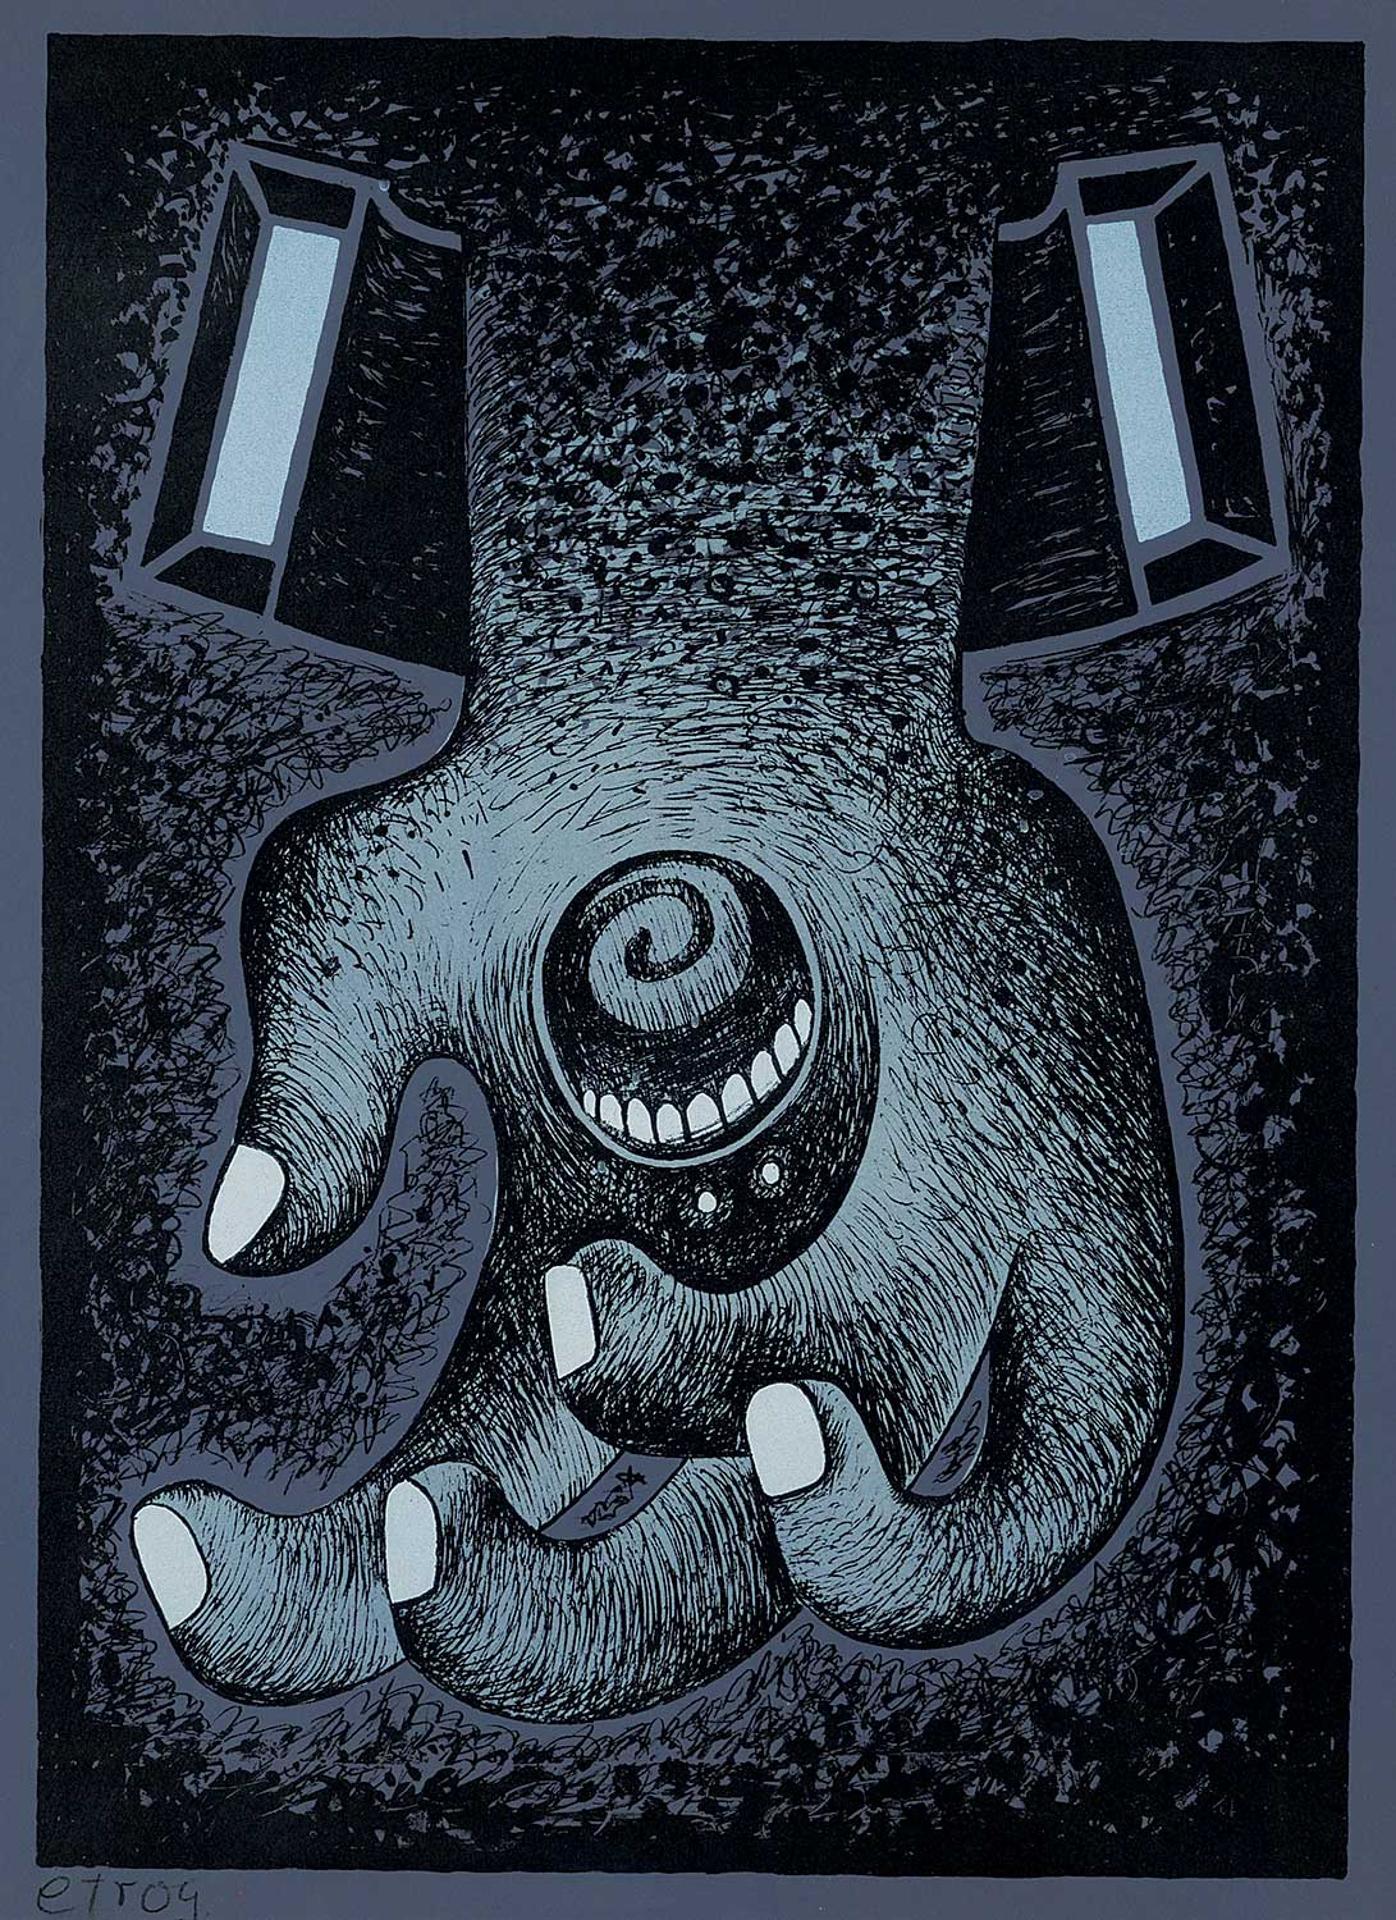 Sorel Etrog (1933-2014) - Untitled - Surreal Hand with Teeth